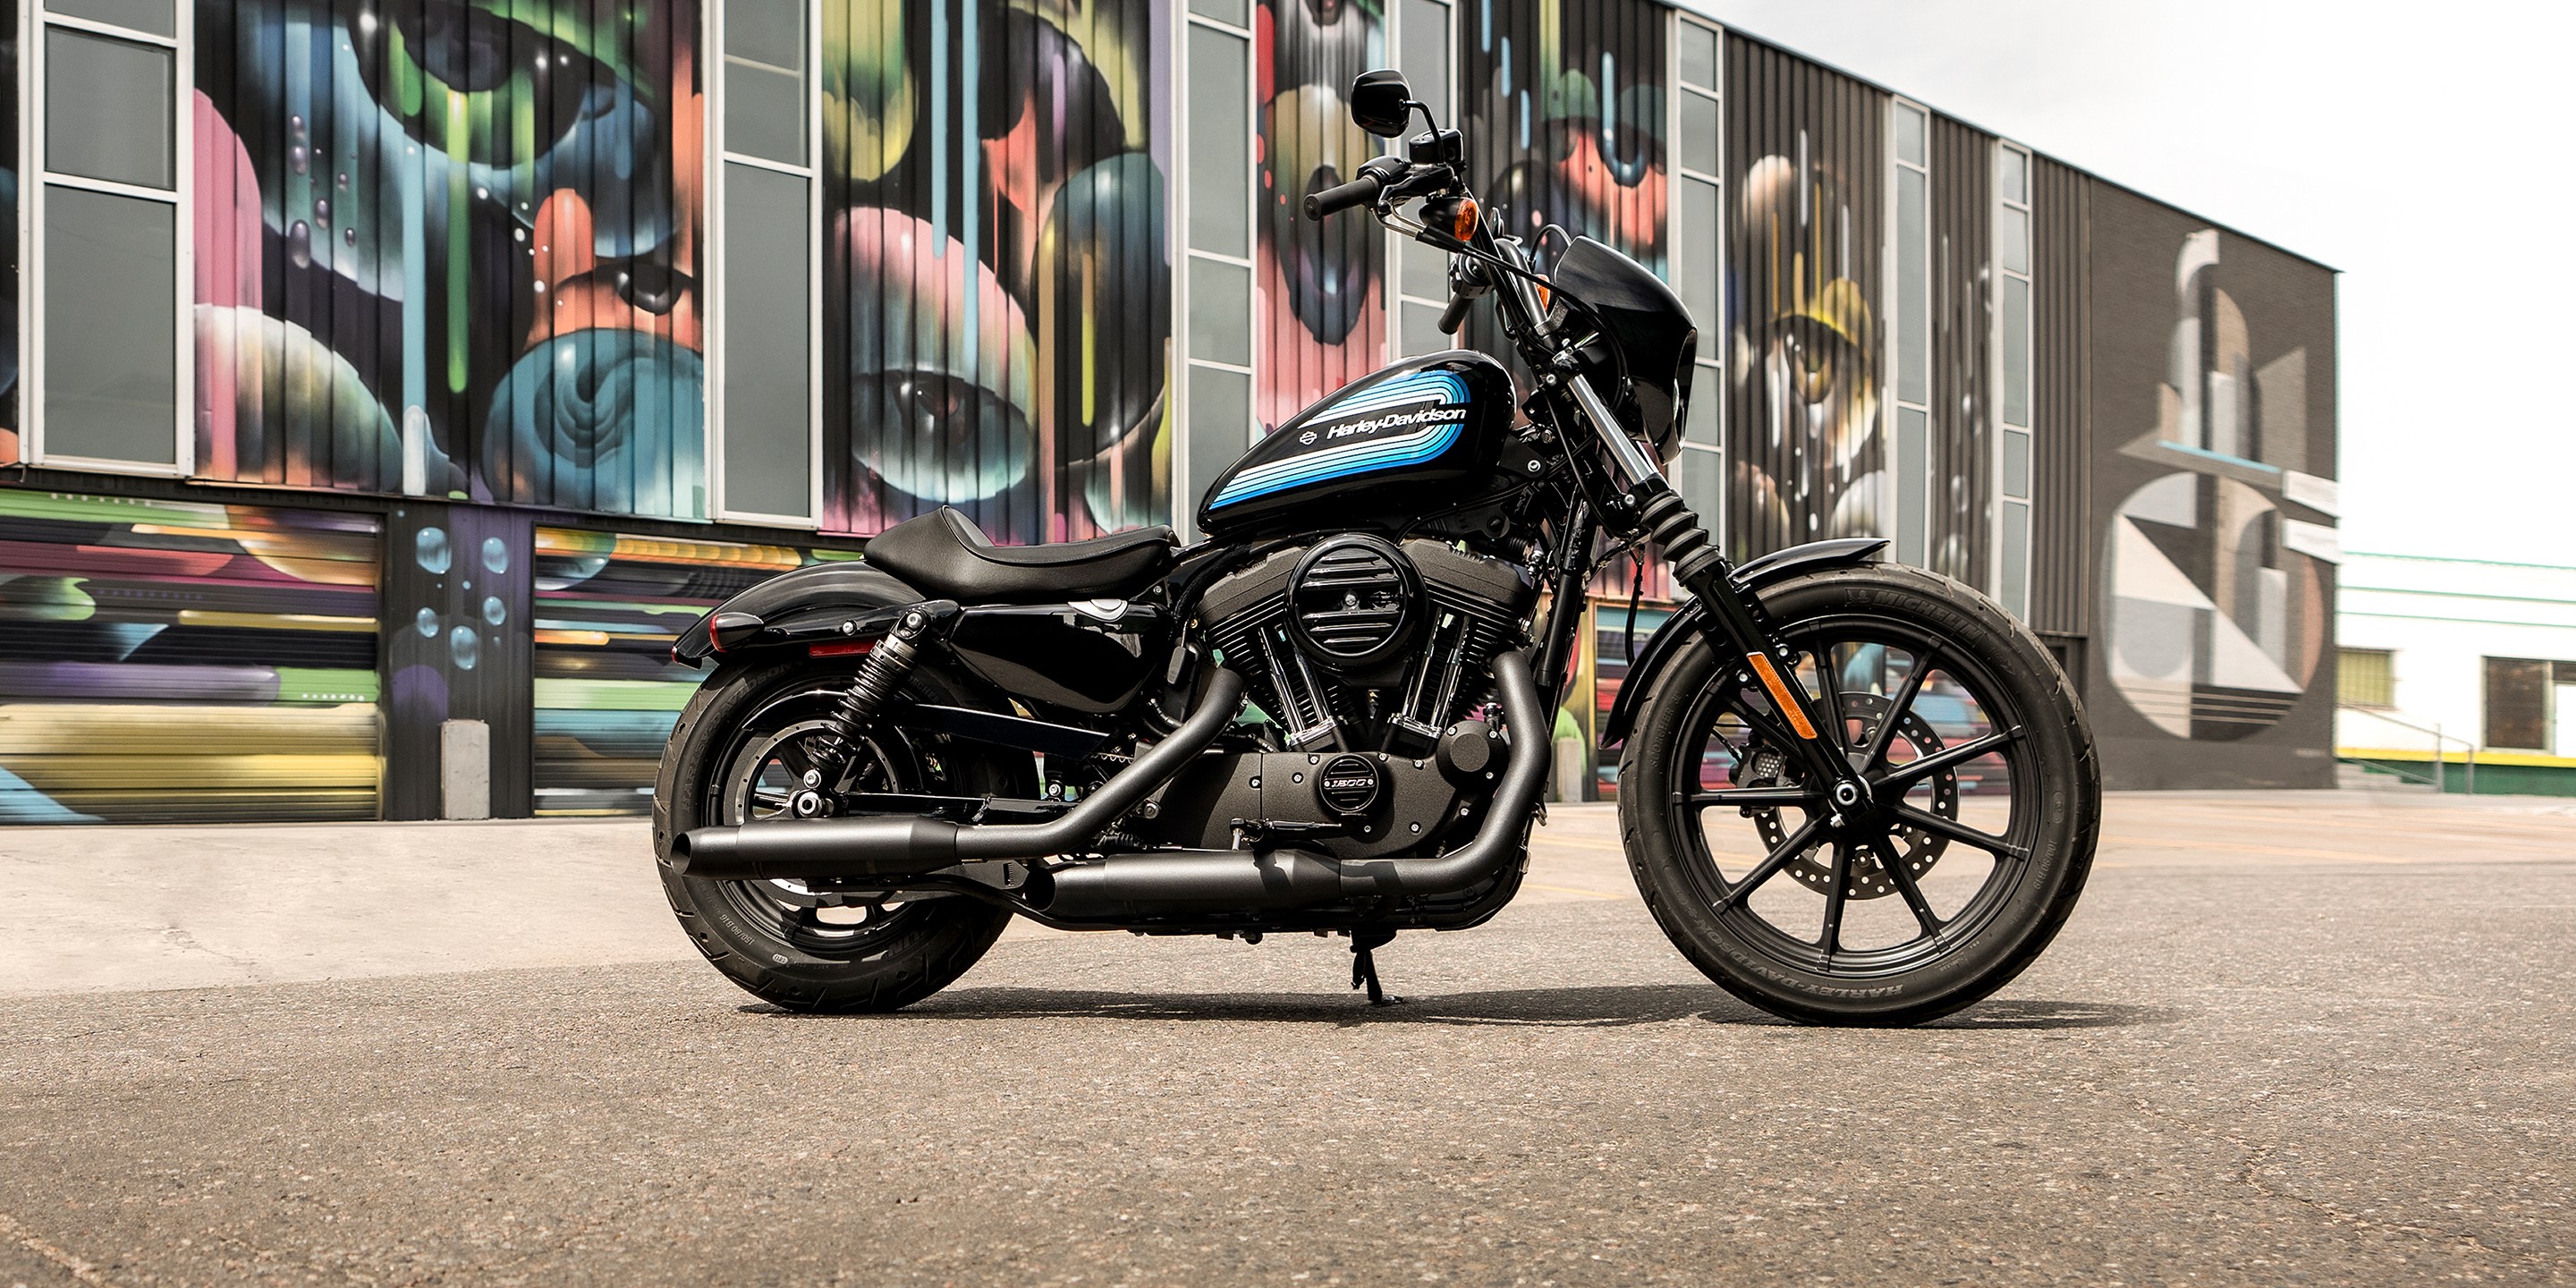 2019 Harley Davidson Iron 1200, HD Bikes, 4k Wallpapers, Images